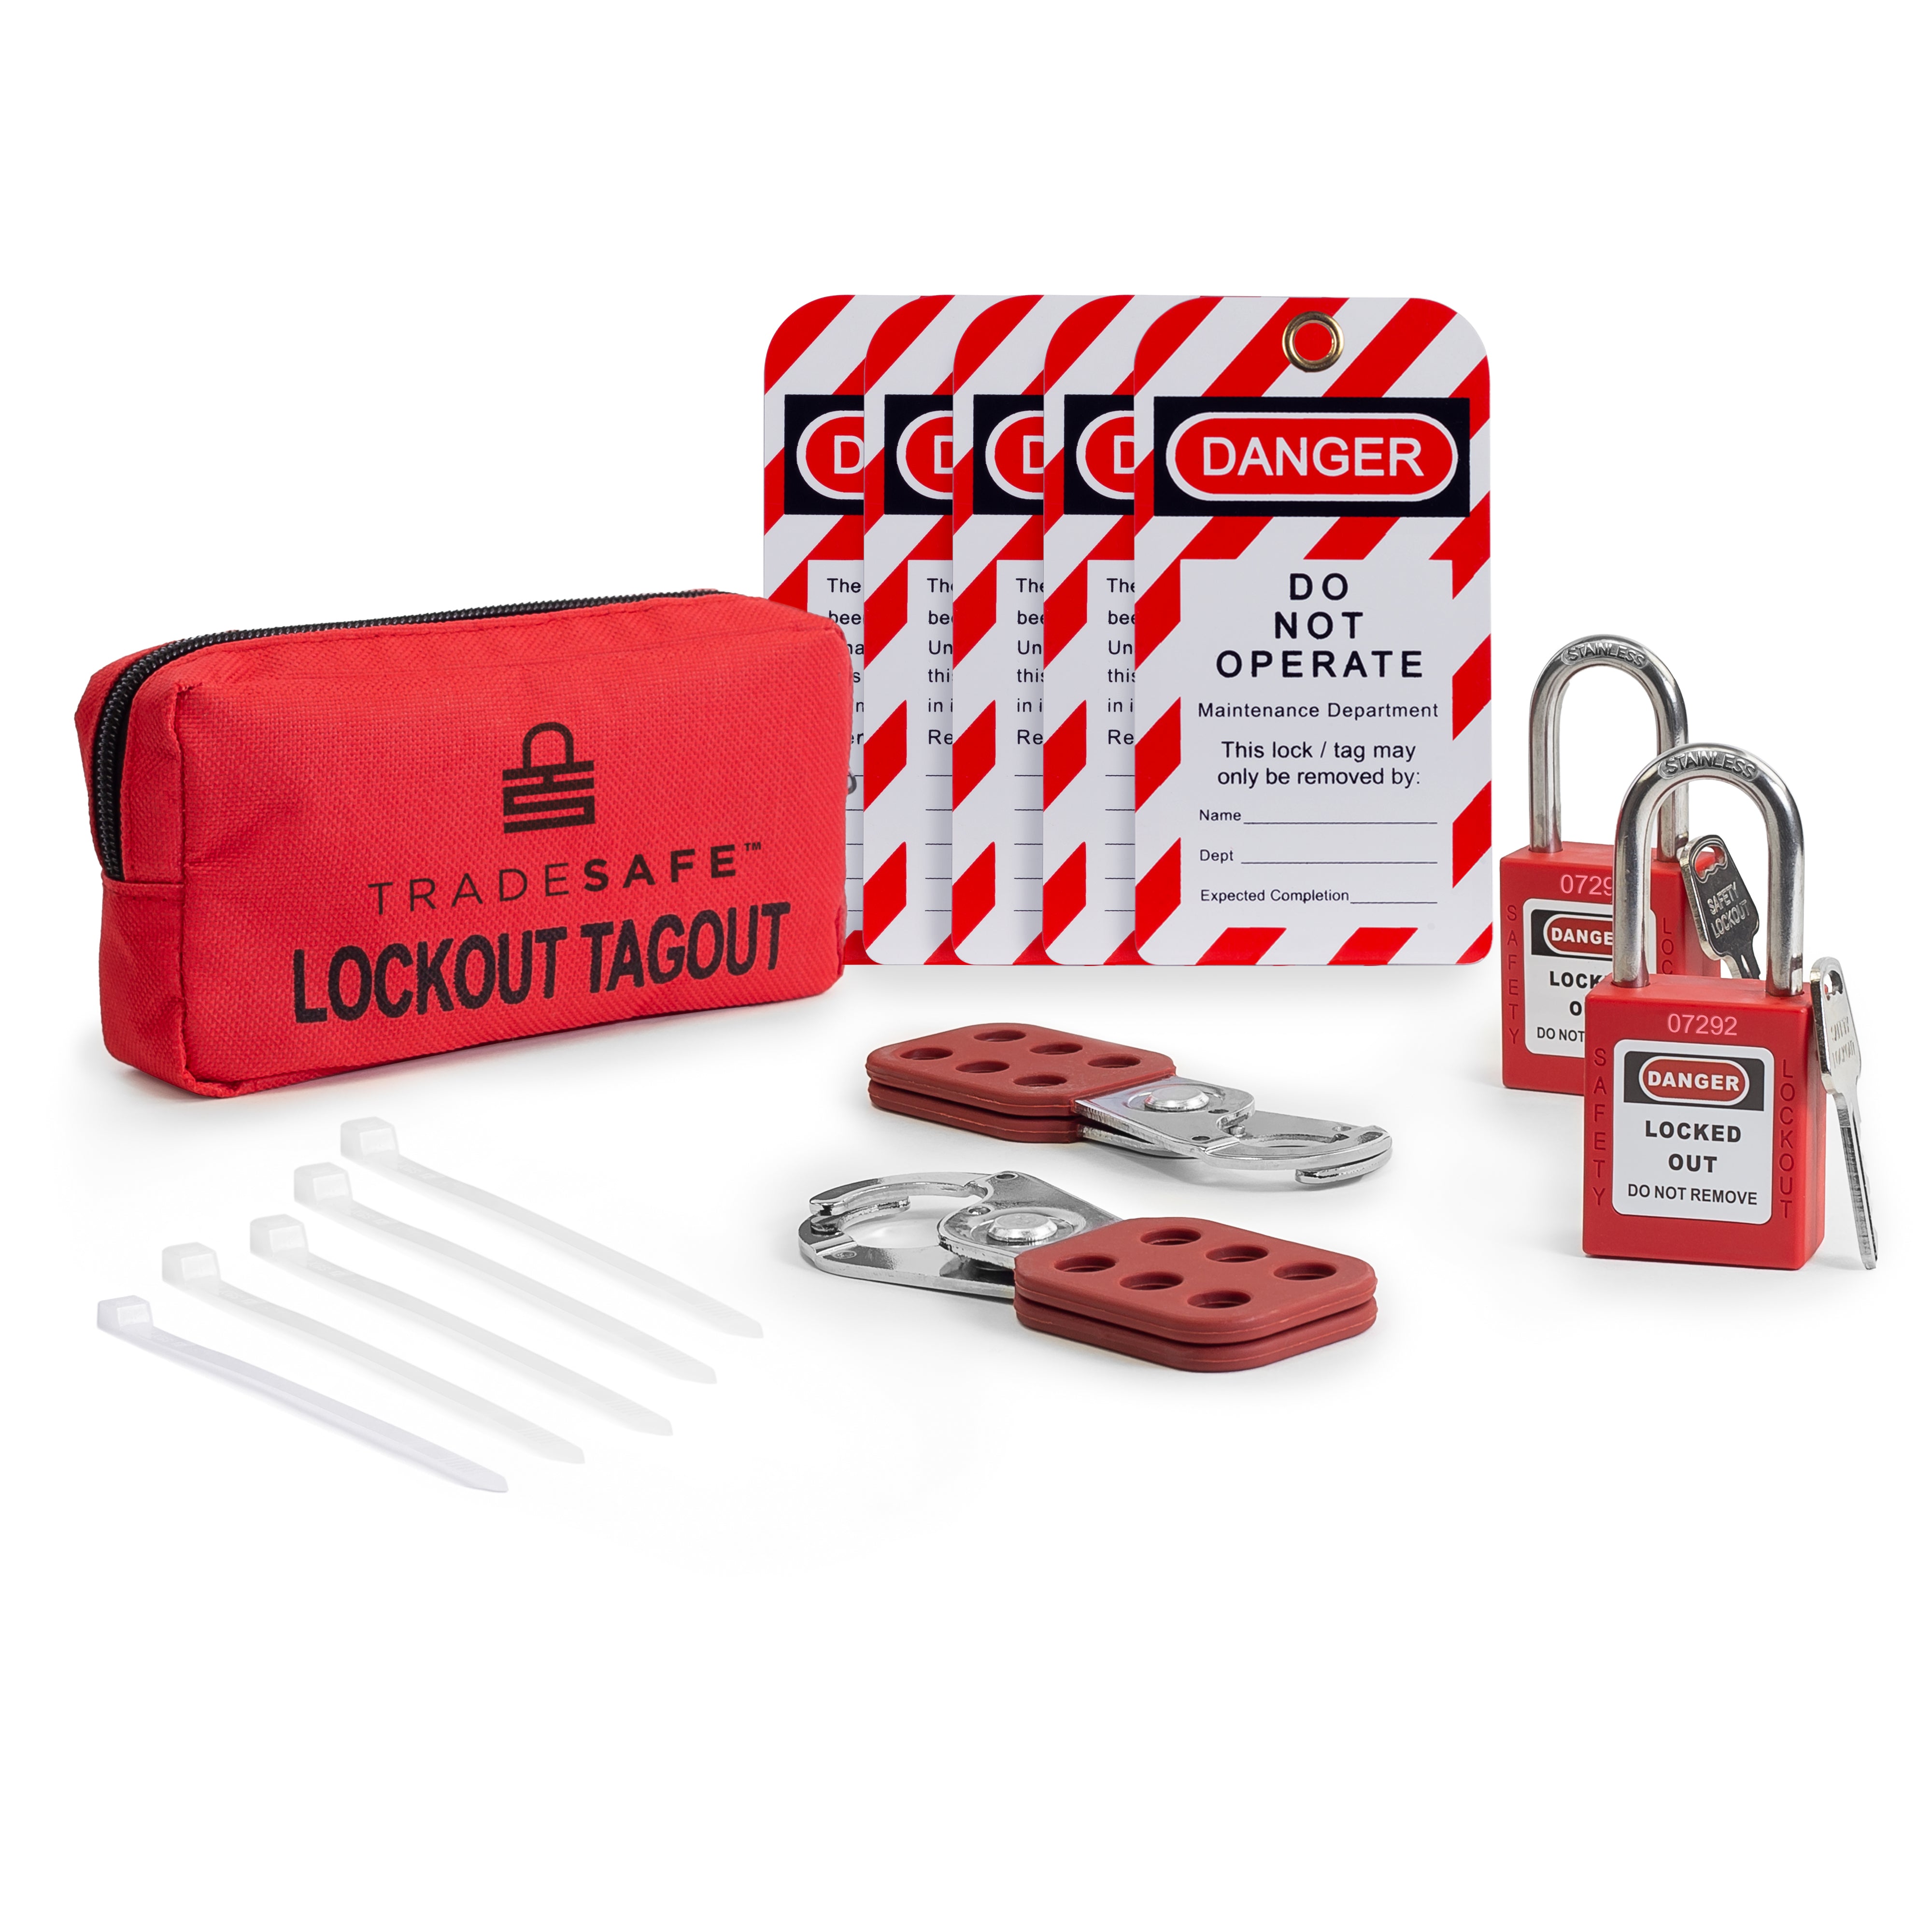 Lockout service monteur set - Lock out kit - LOTOTO kit - Loto kit